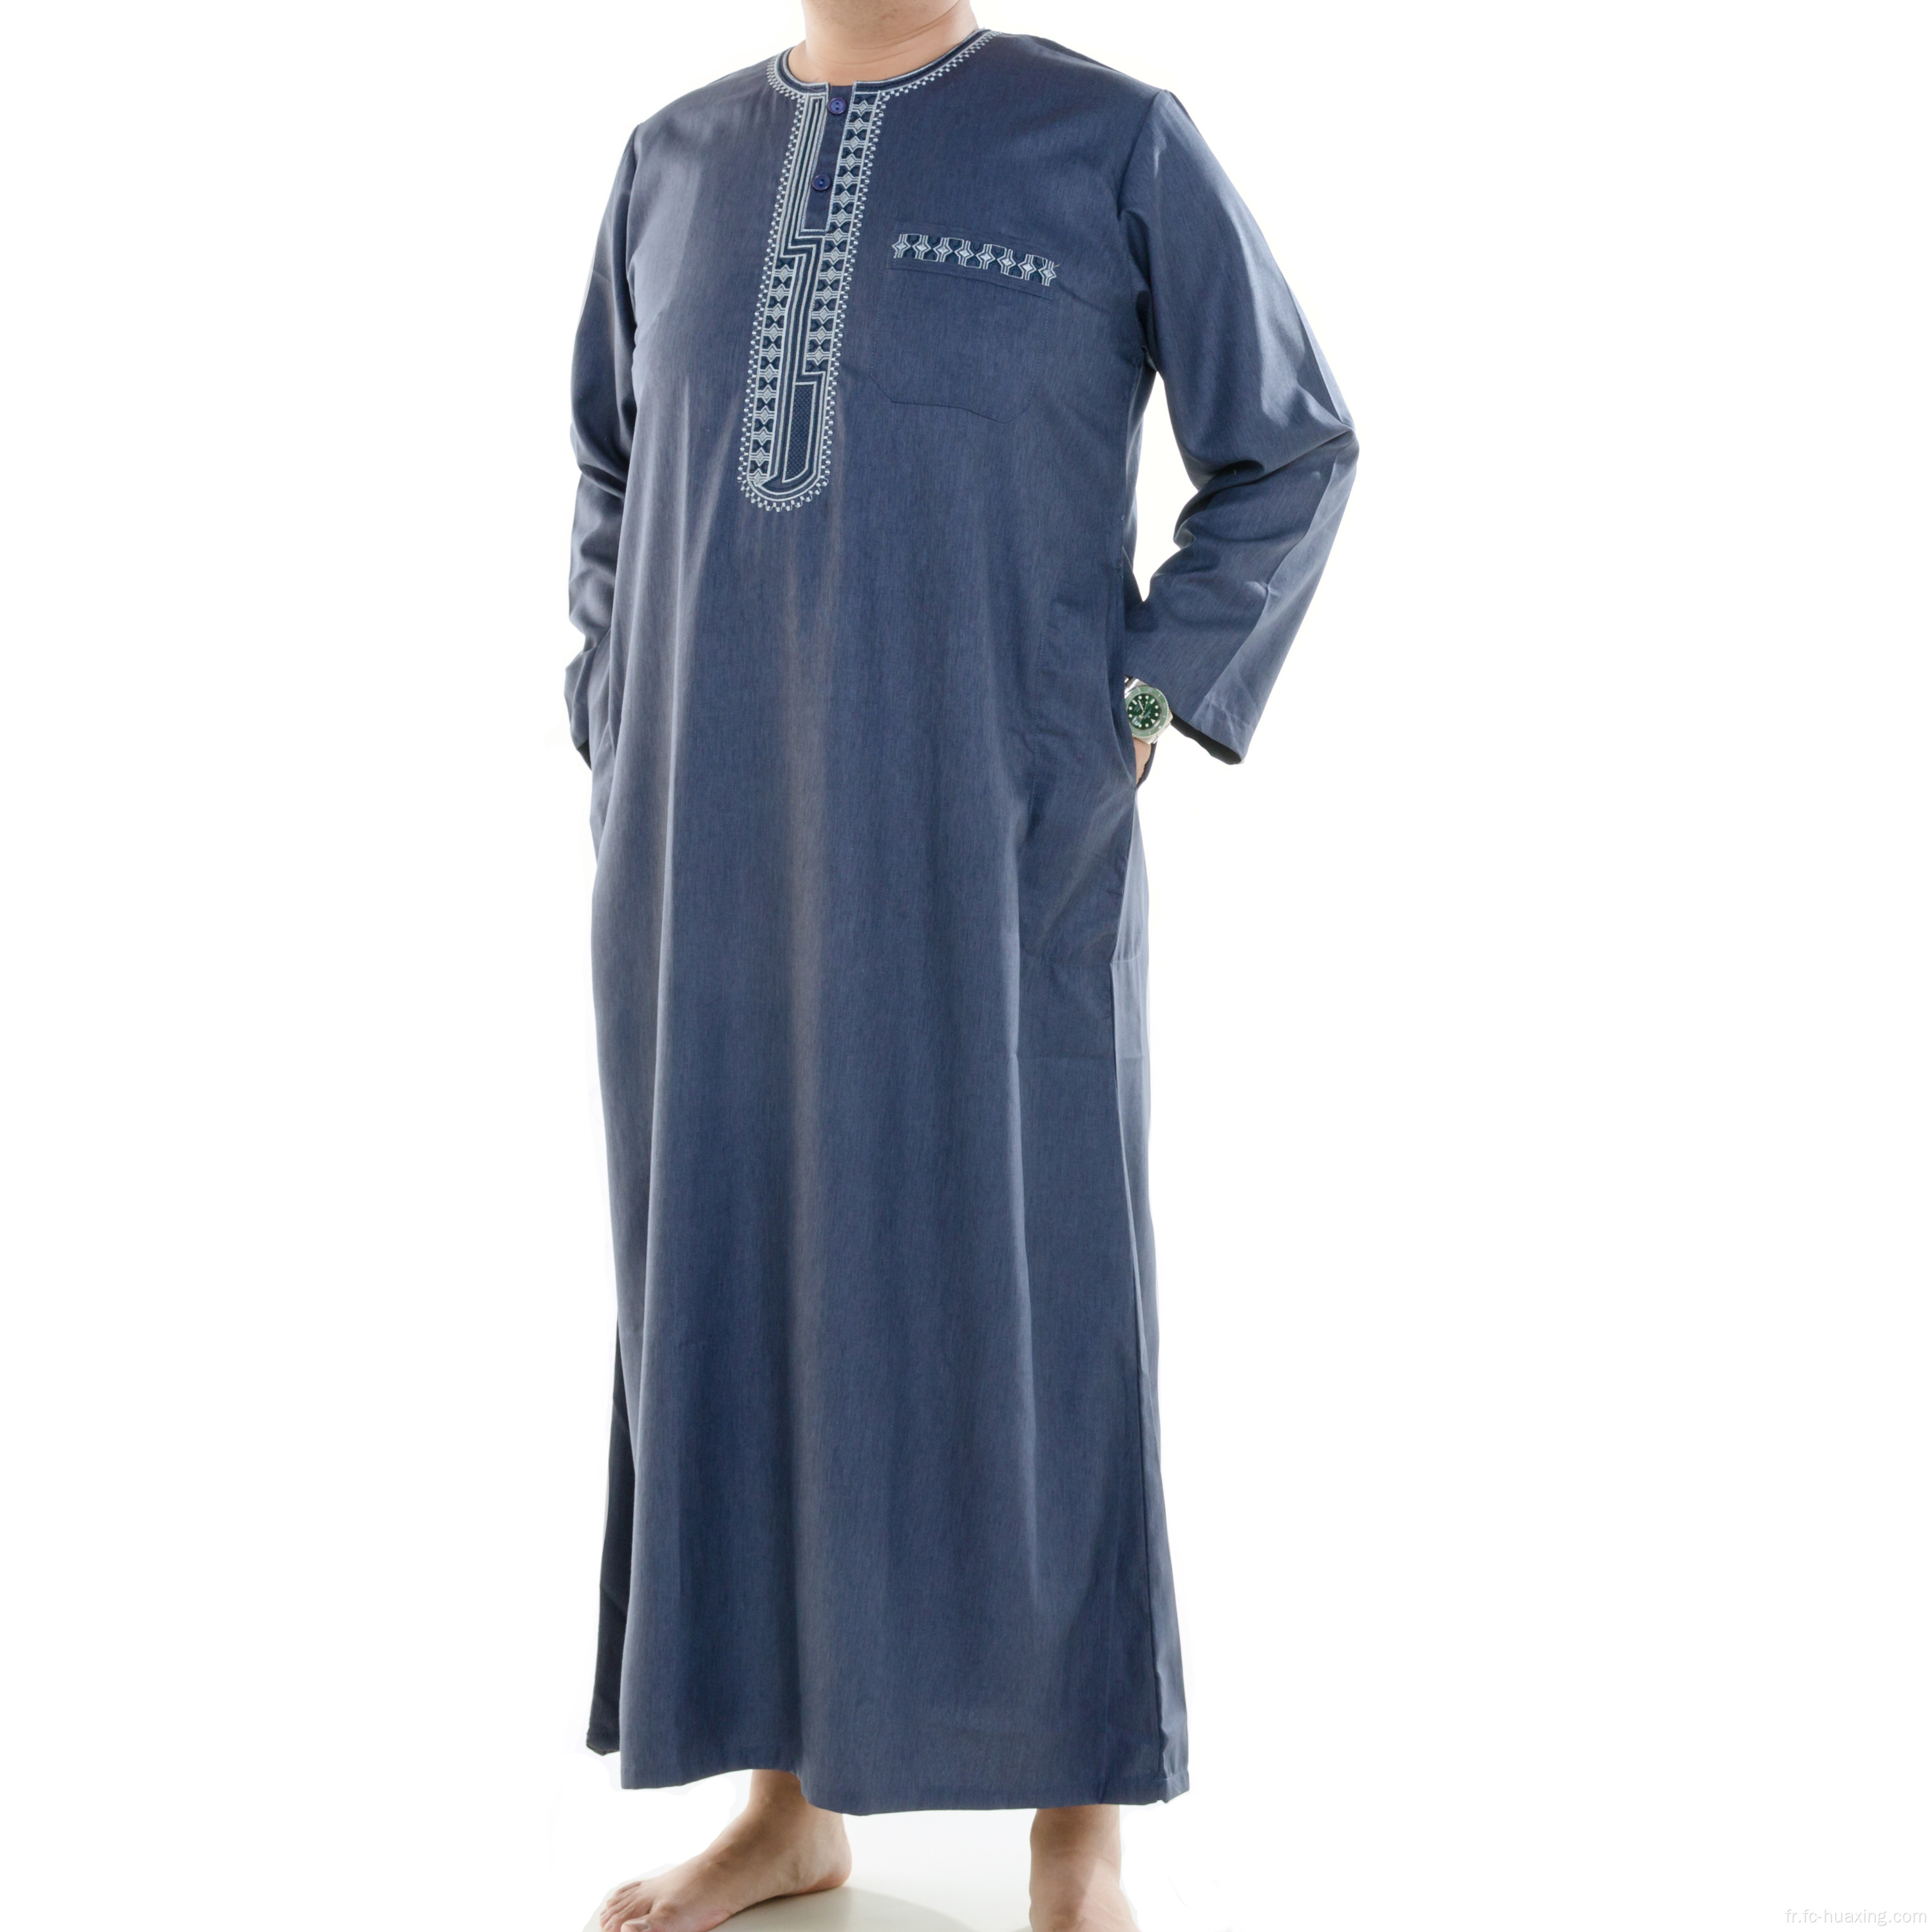 Vêtements islamiques hommes thobe arabe musulman thobe